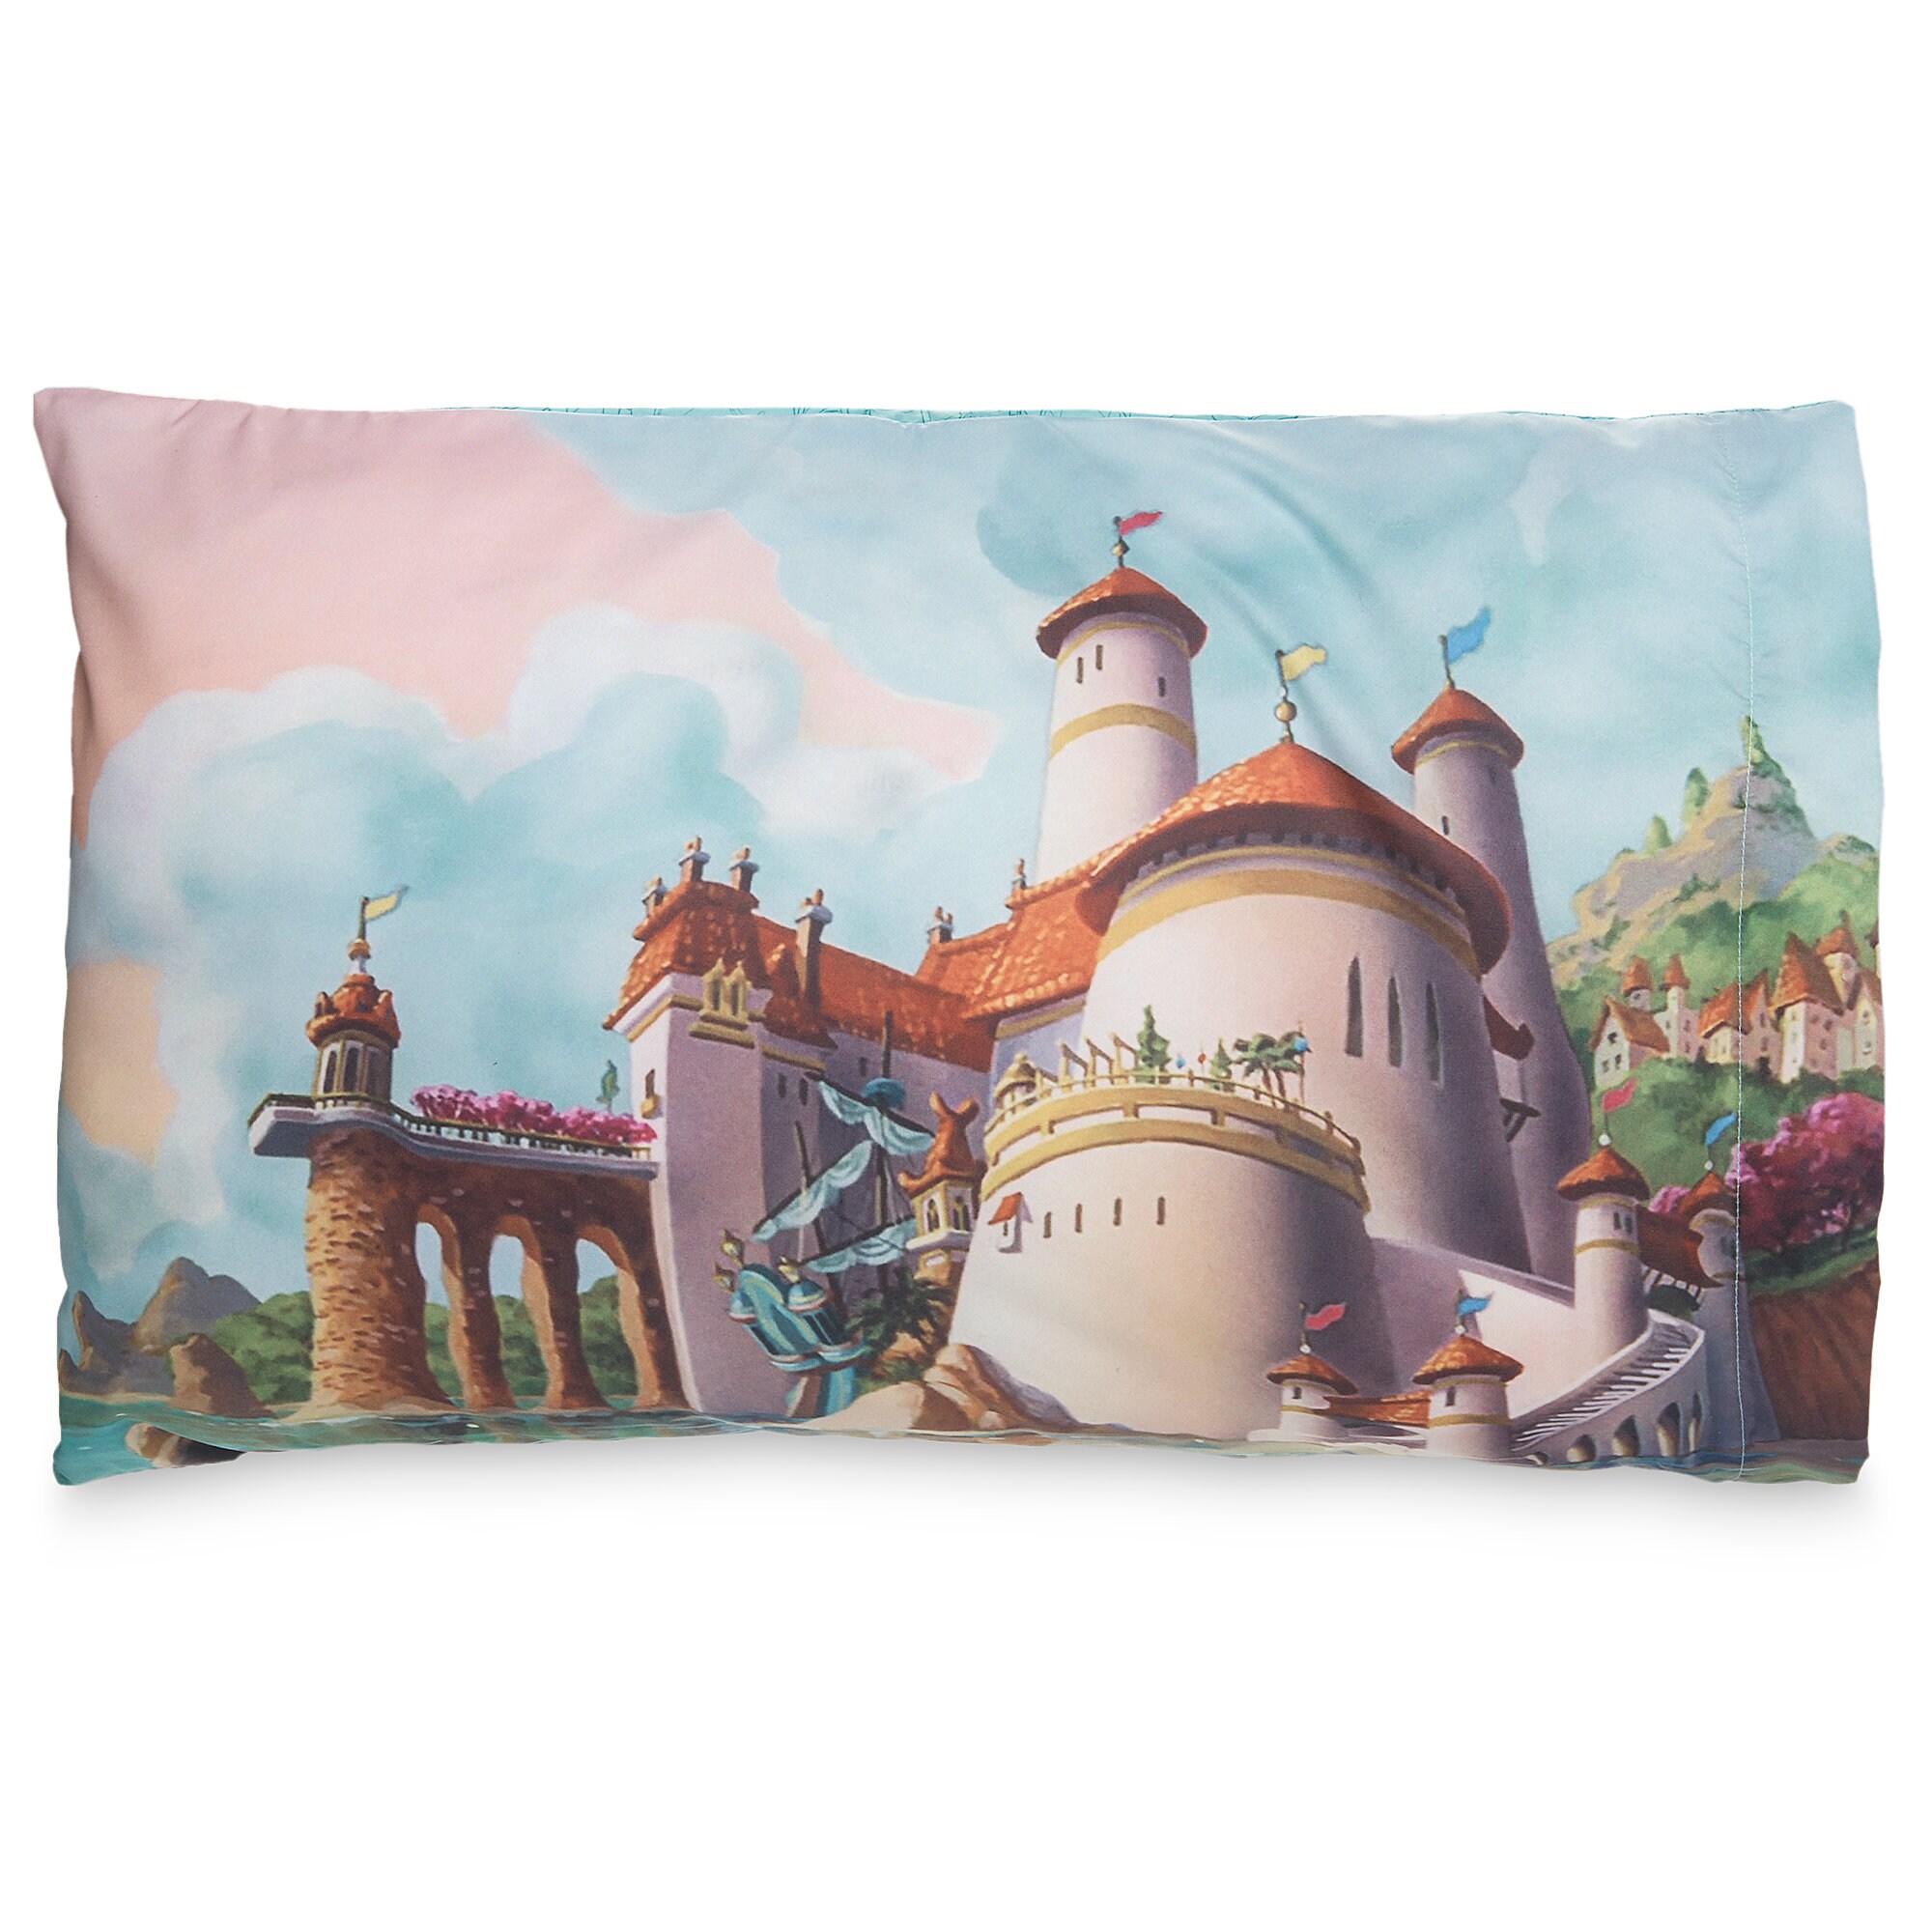 Prince Eric Pillowcase Set - Oh My Disney - The Little Mermaid